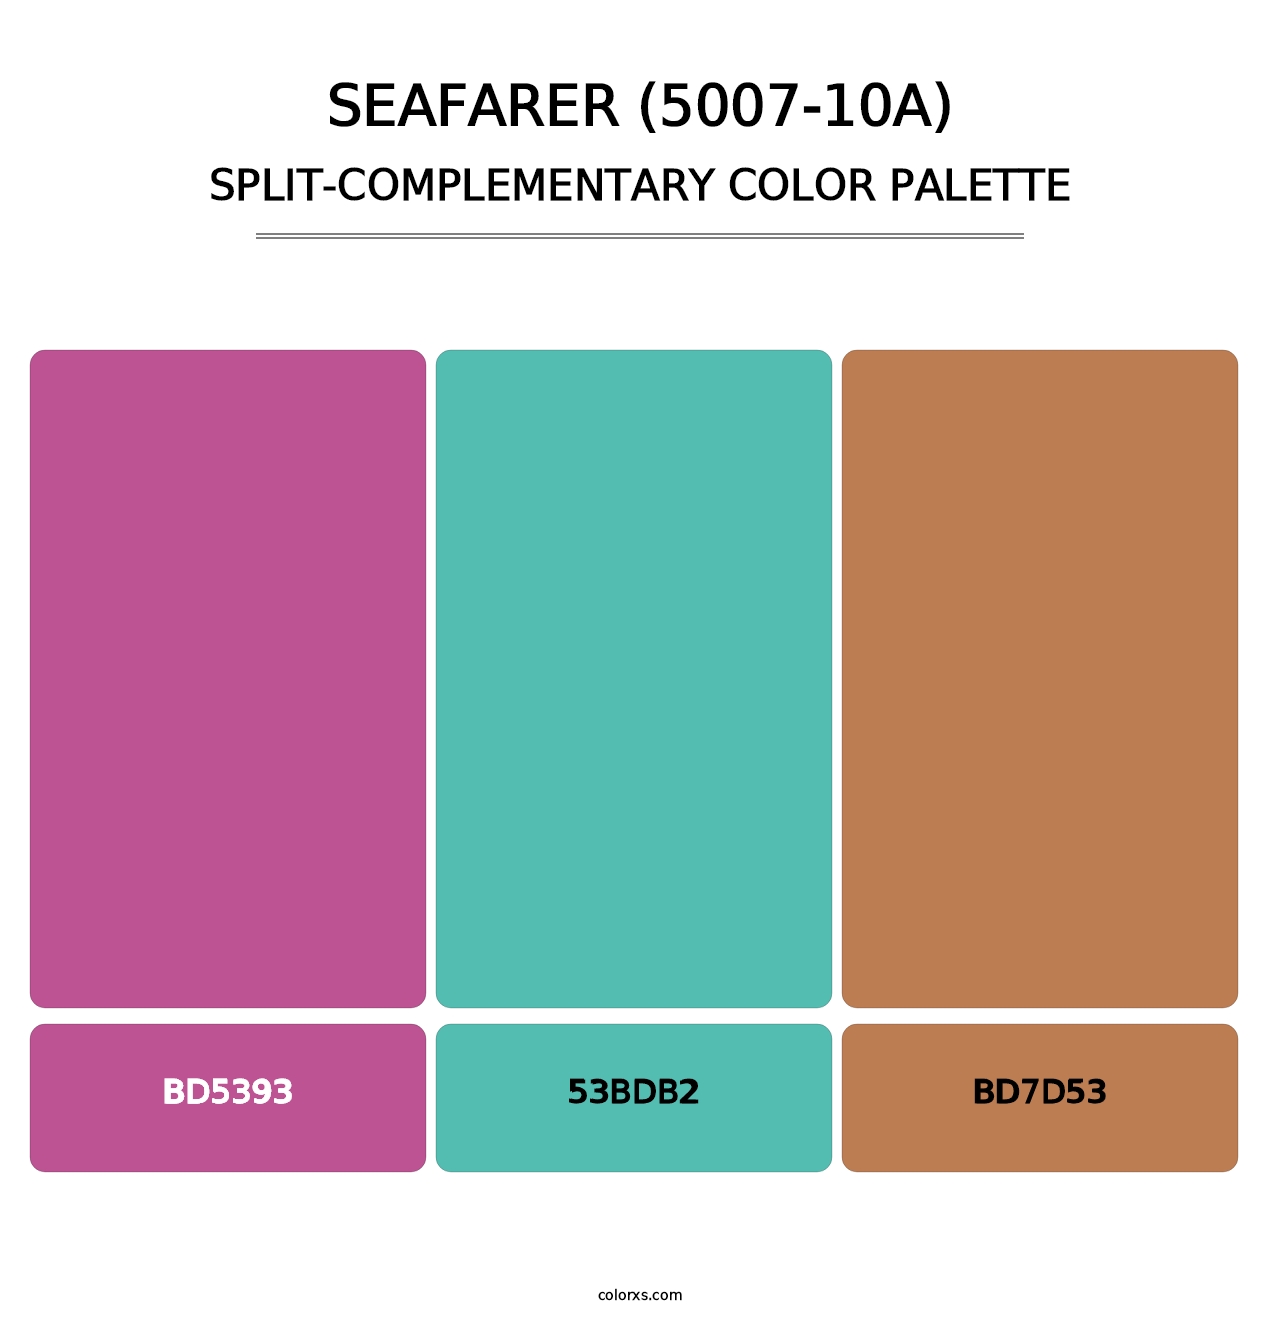 Seafarer (5007-10A) - Split-Complementary Color Palette